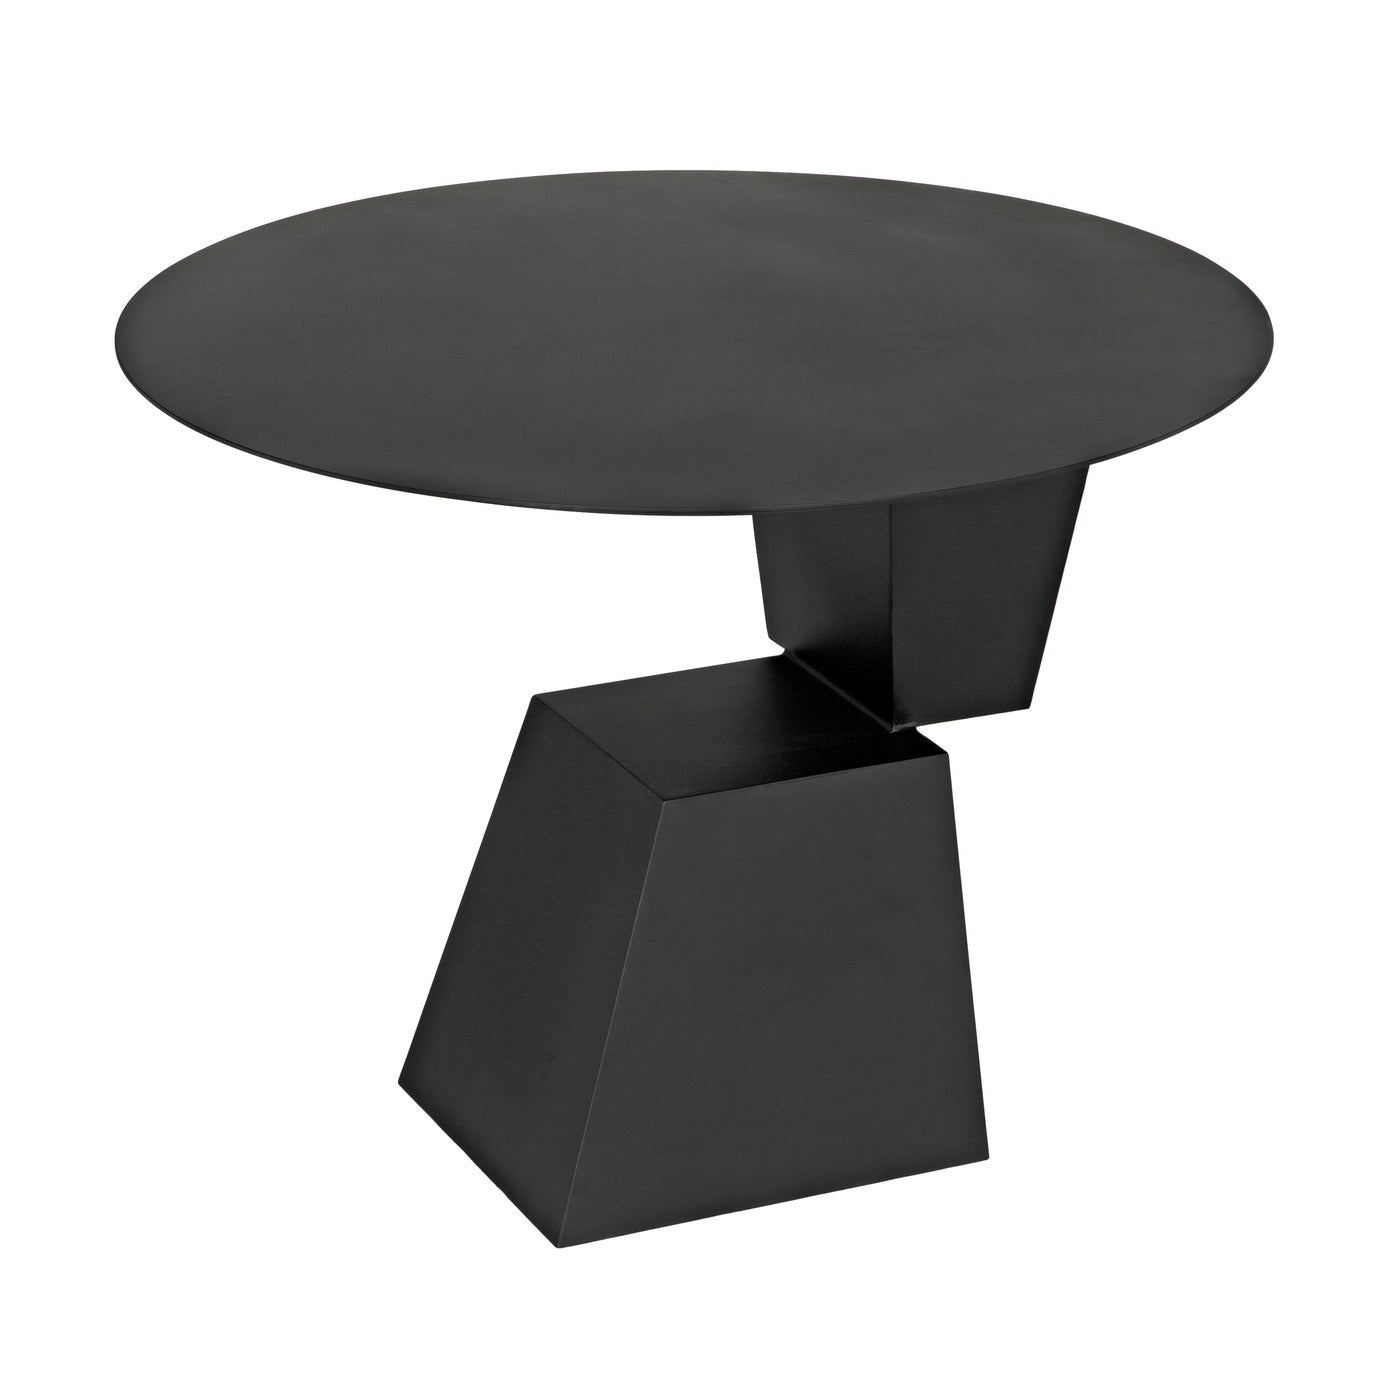 Round Pieta Table, Black Steel